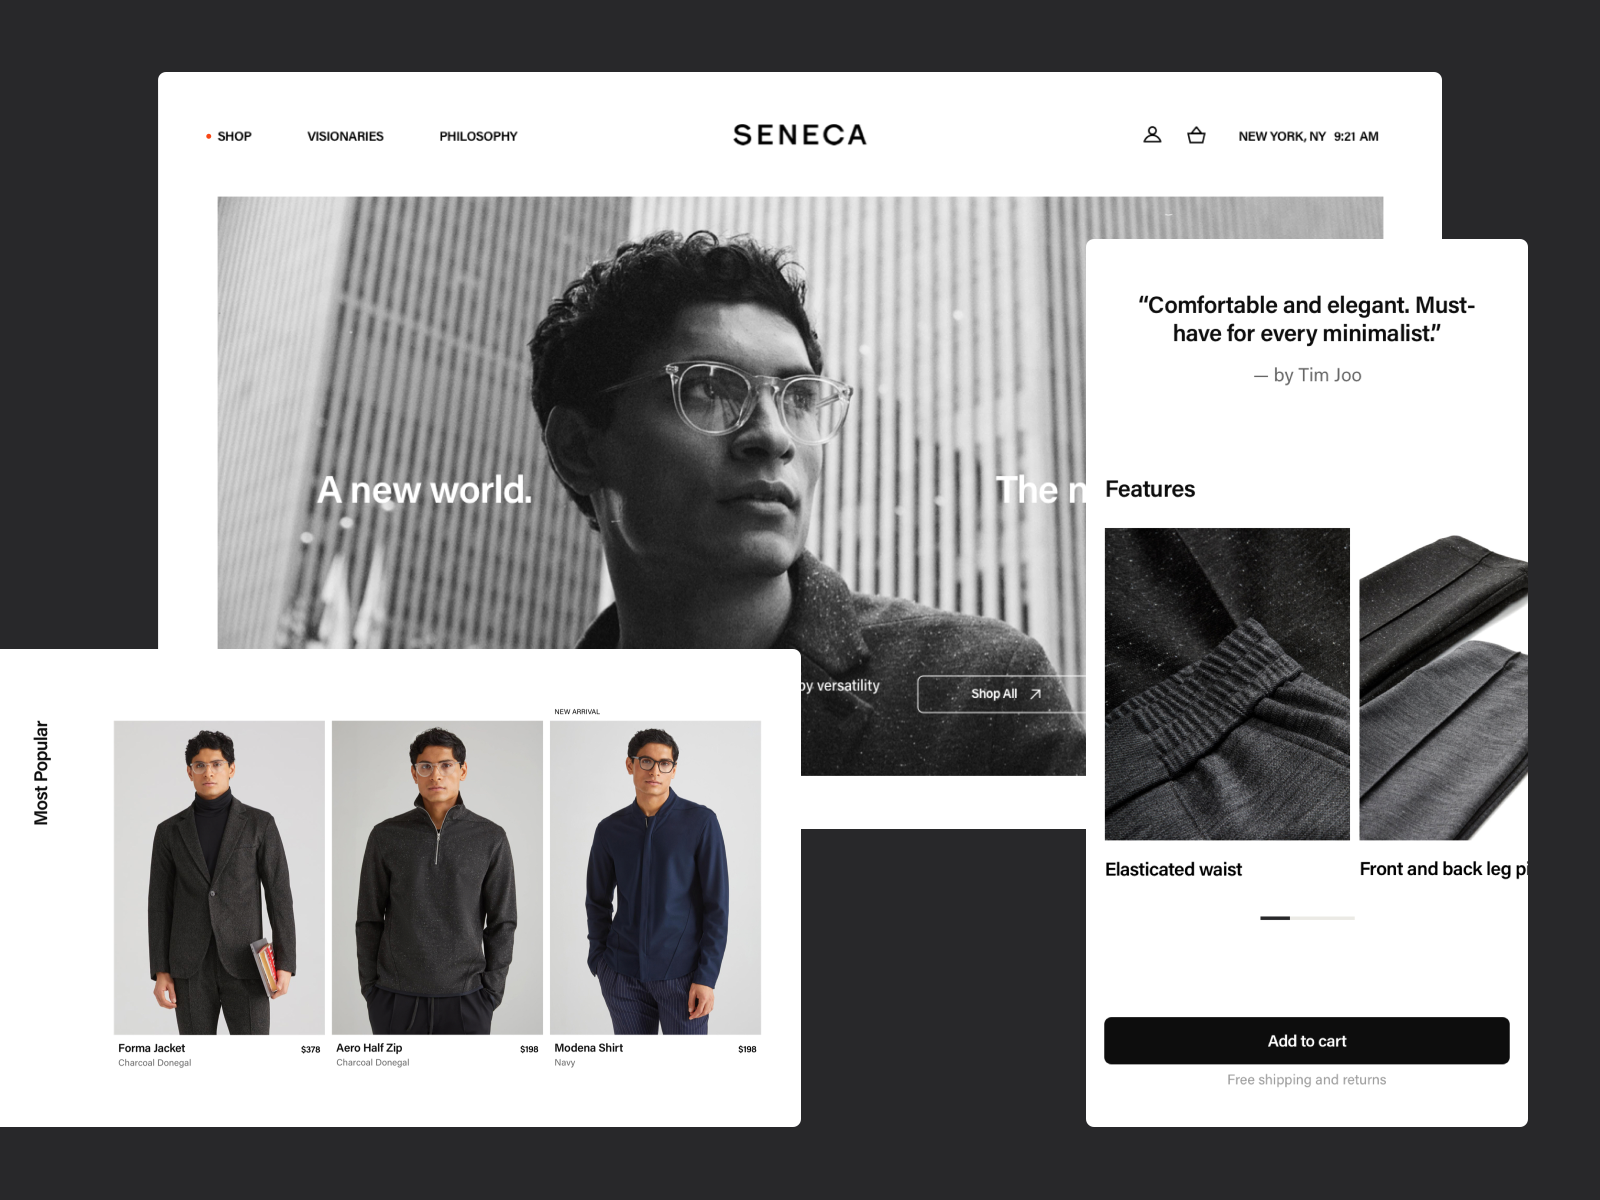 SENECA: Hero image & other images